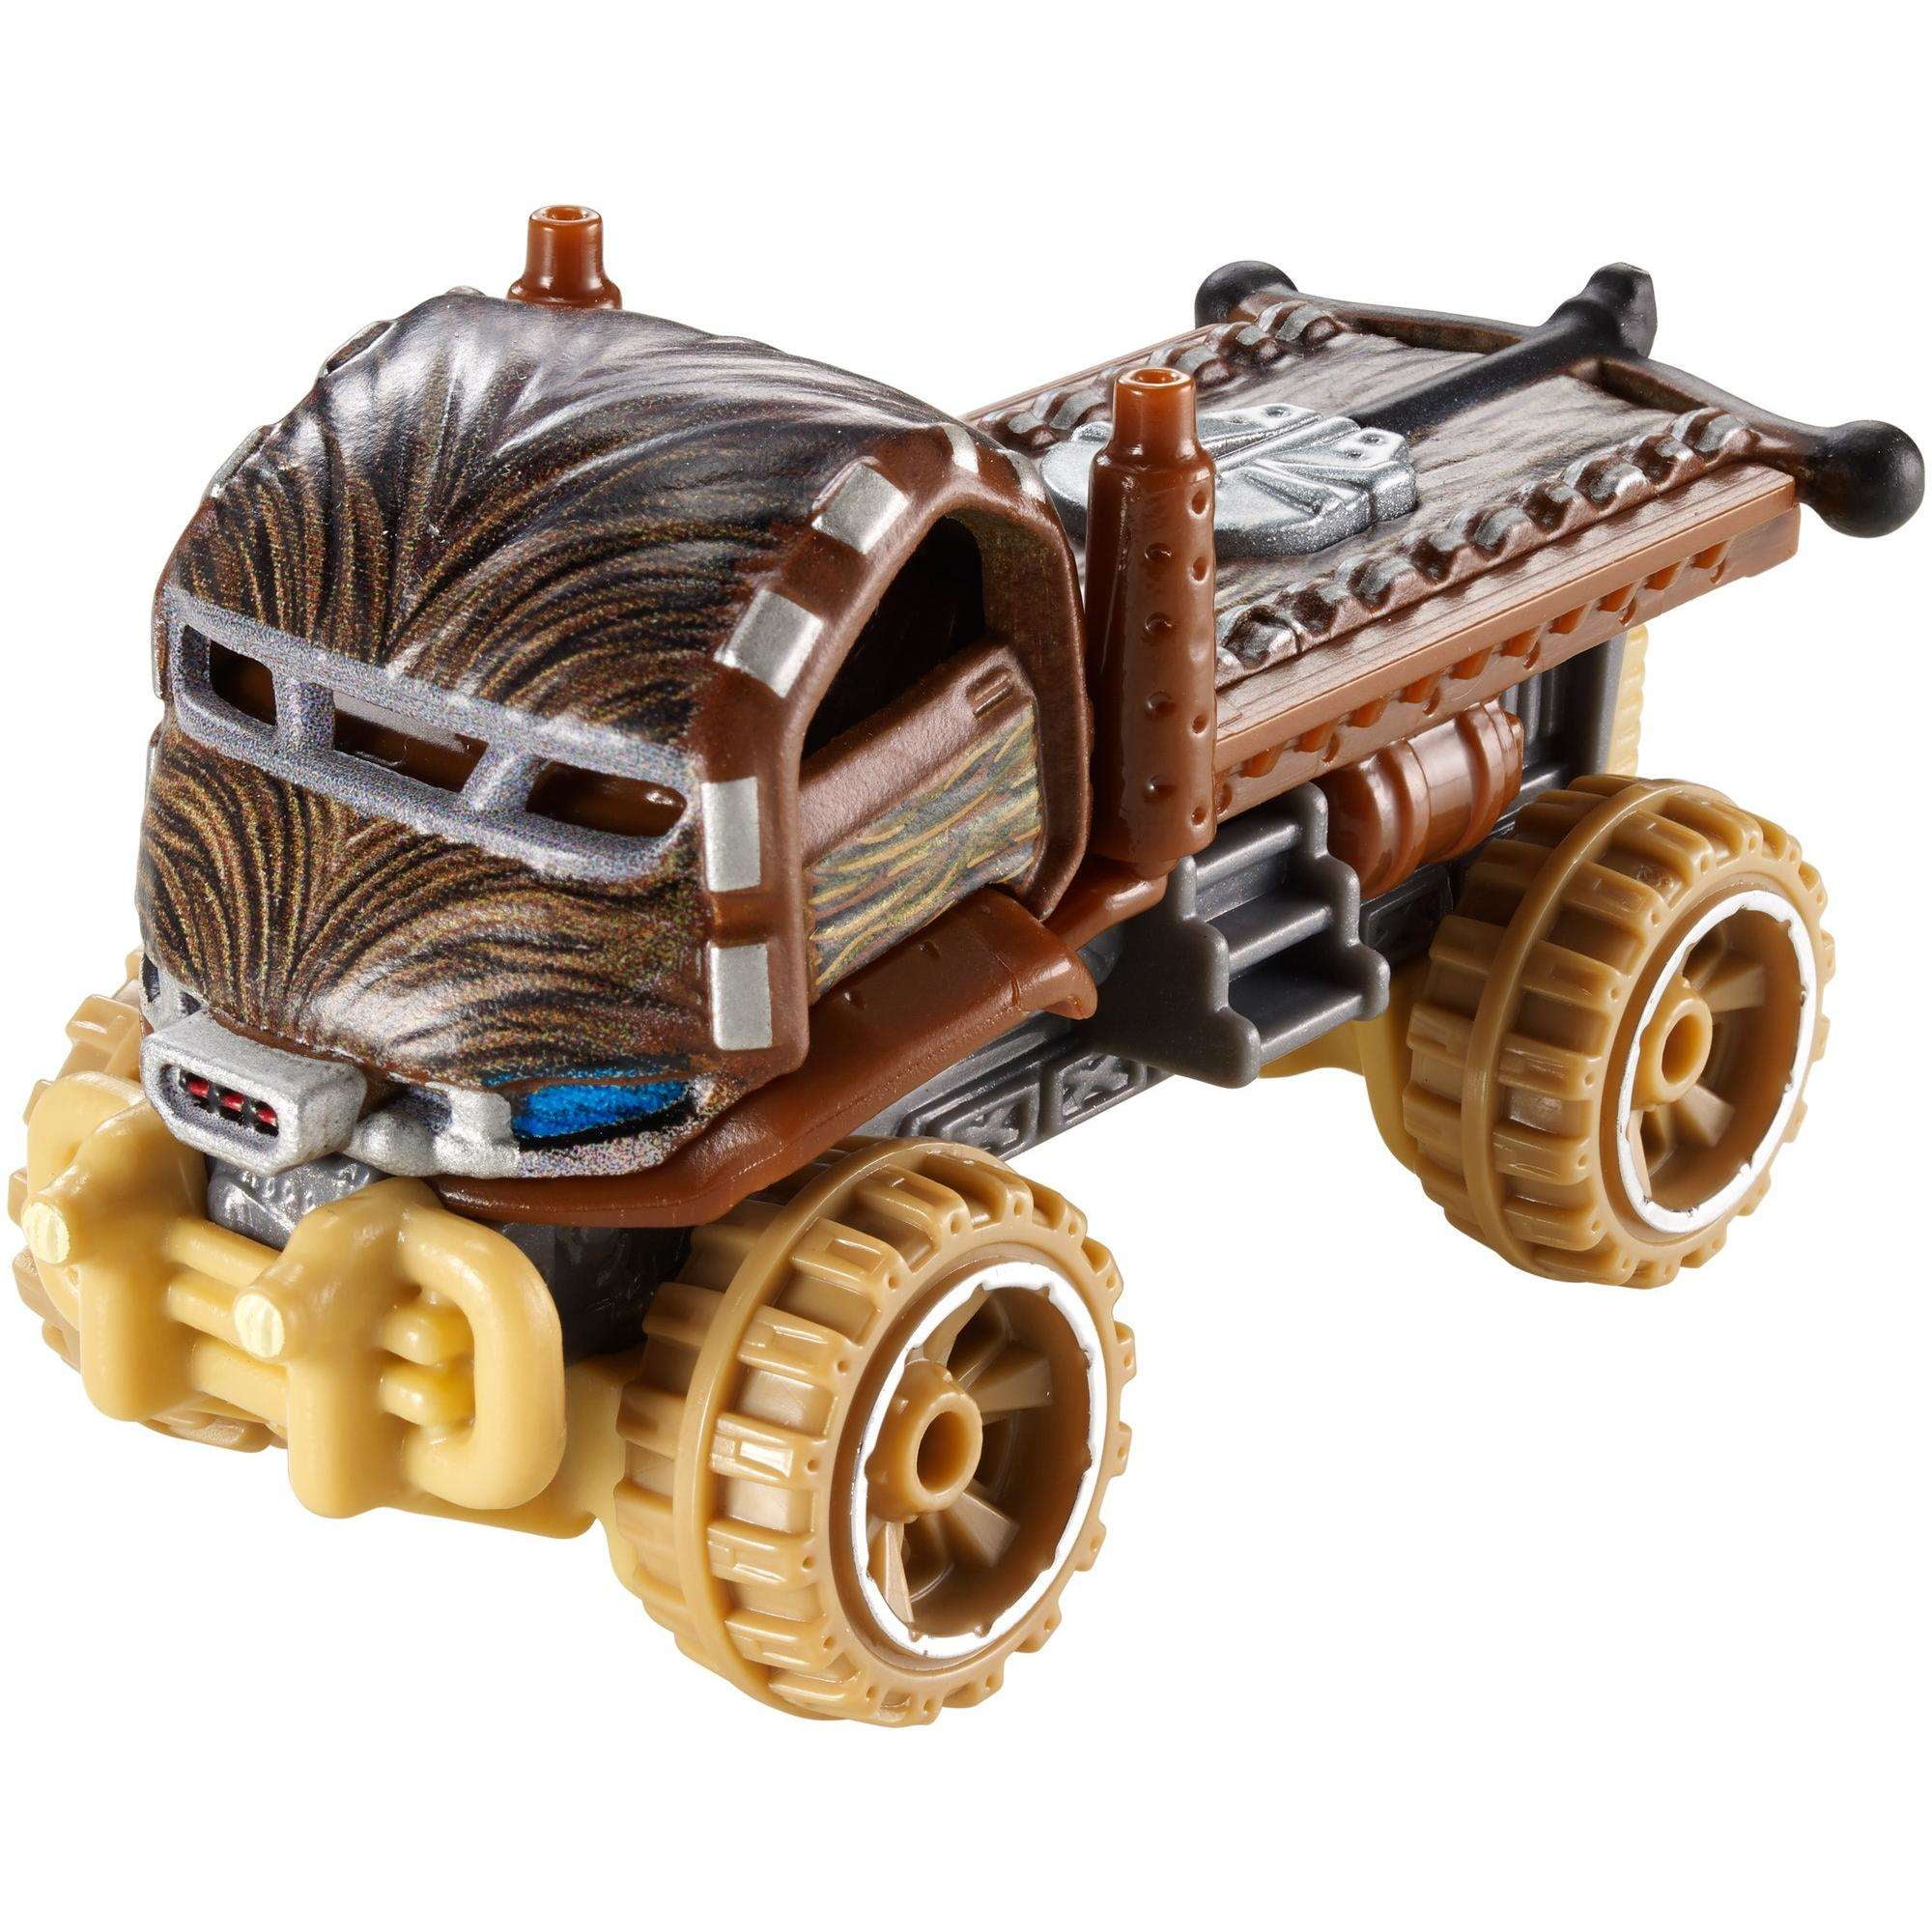 Hot Wheels Star Wars Character Cars Yoda & Chewbacca NEW